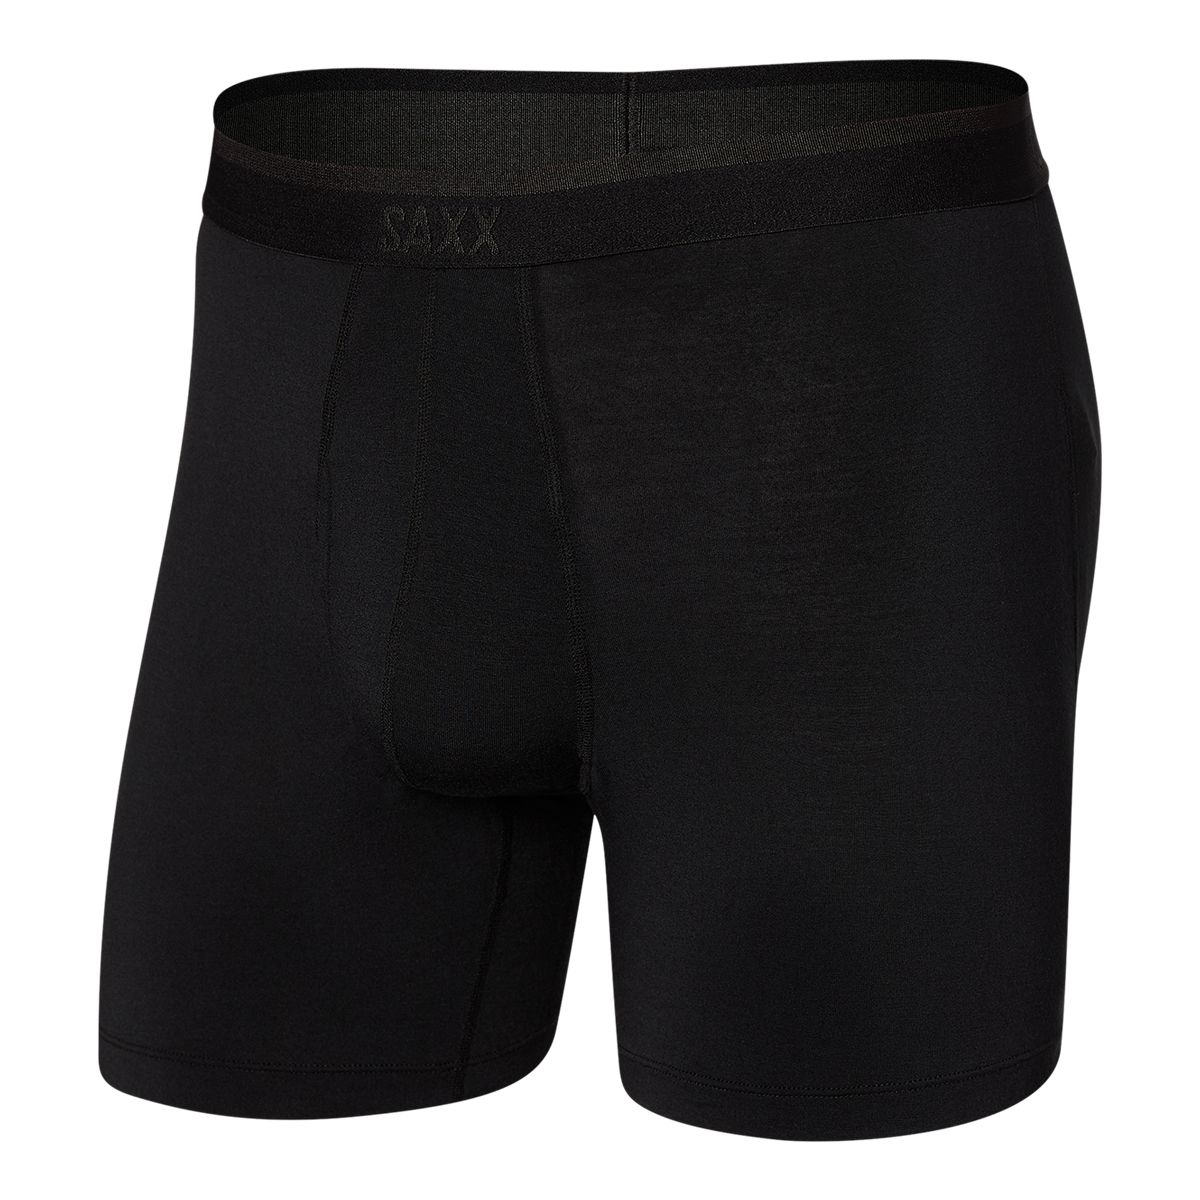 SAXX Platinum Men's Boxer Brief with Fly, Underwear, Breathable